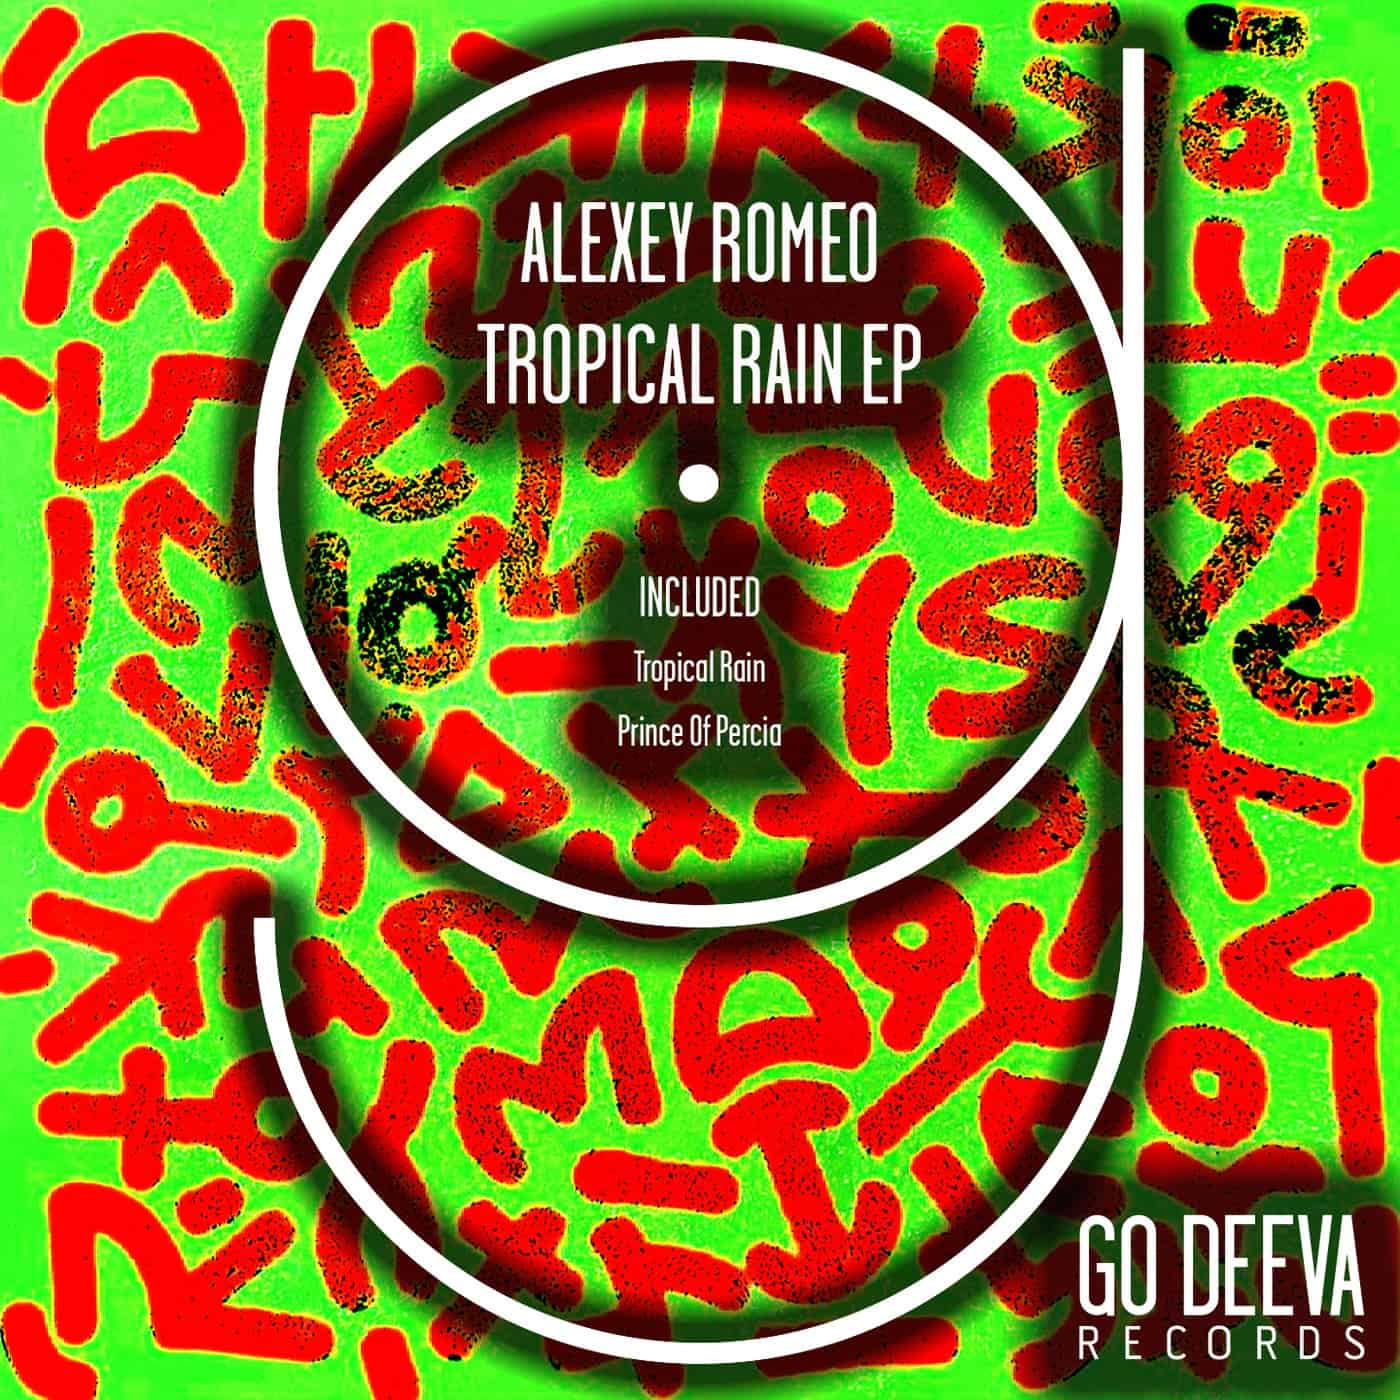 Release Cover: Alexey Romeo - Tropical Rain Ep on Electrobuzz